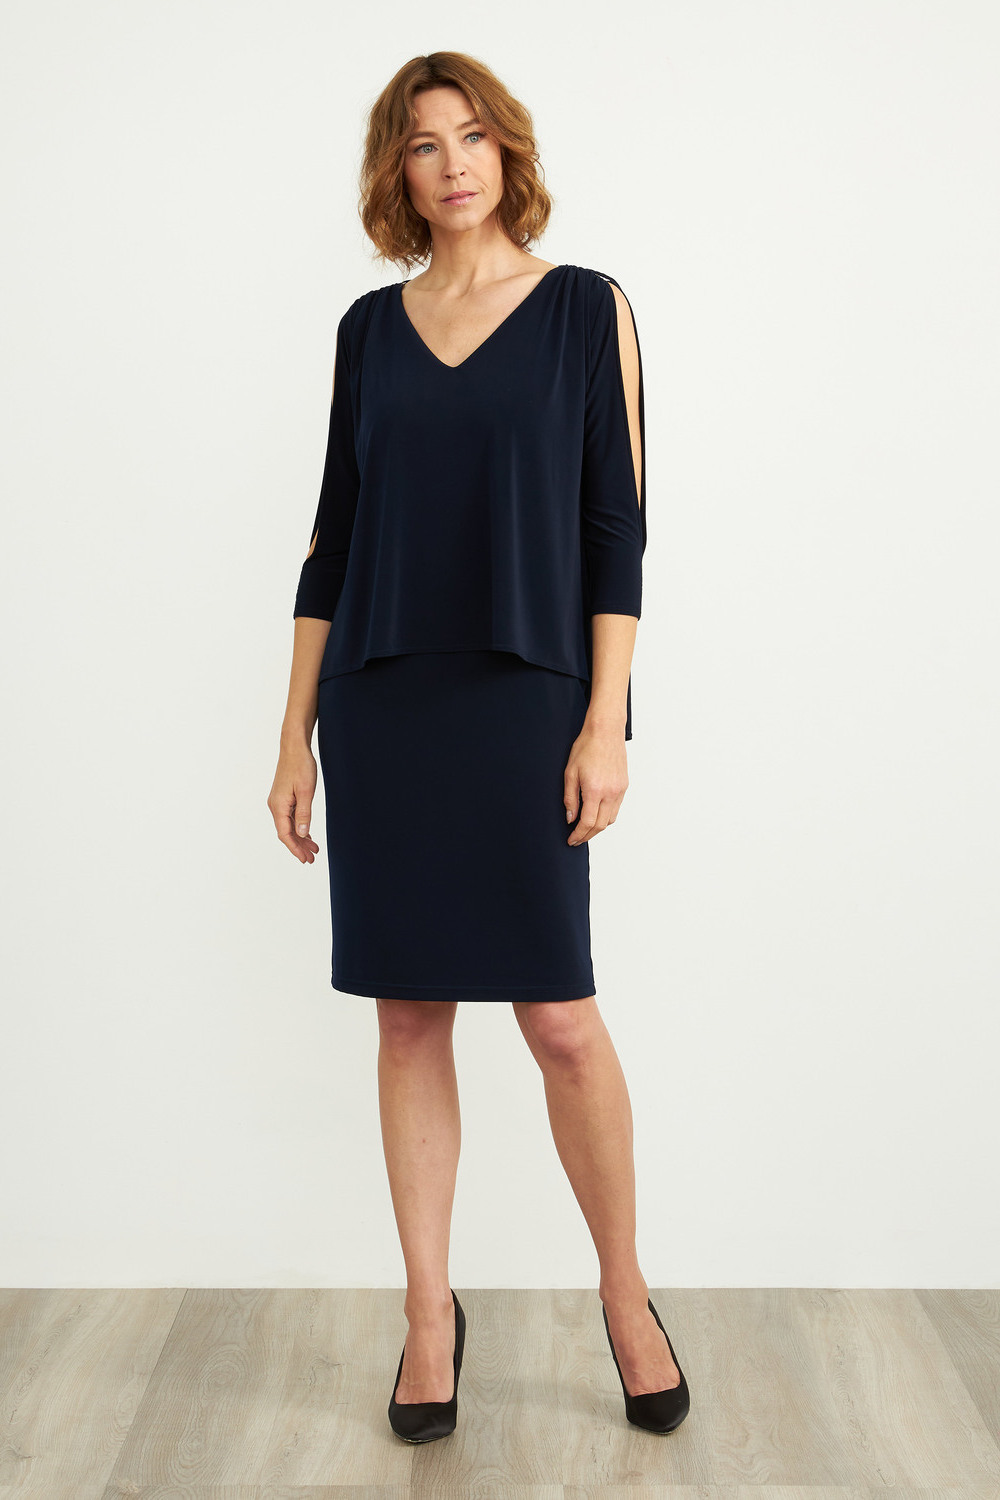 Joseph Ribkoff V-neck Dress Style 204109. Midnight Blue